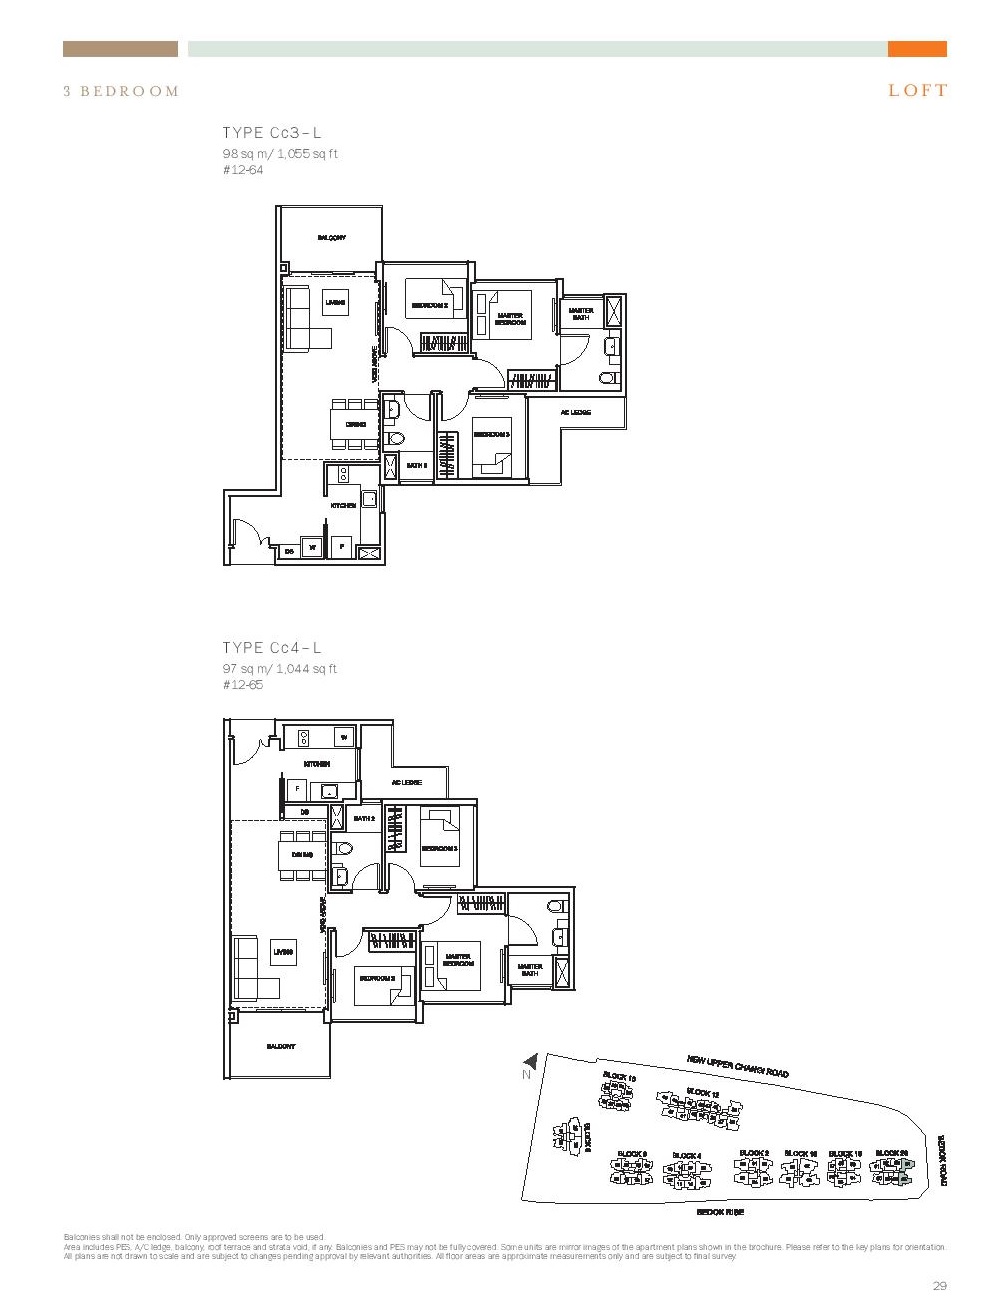 The Glades @ Tanah Merah 3 Bedroom Loft Floor Type Cc3-L, Cc4-L Plans